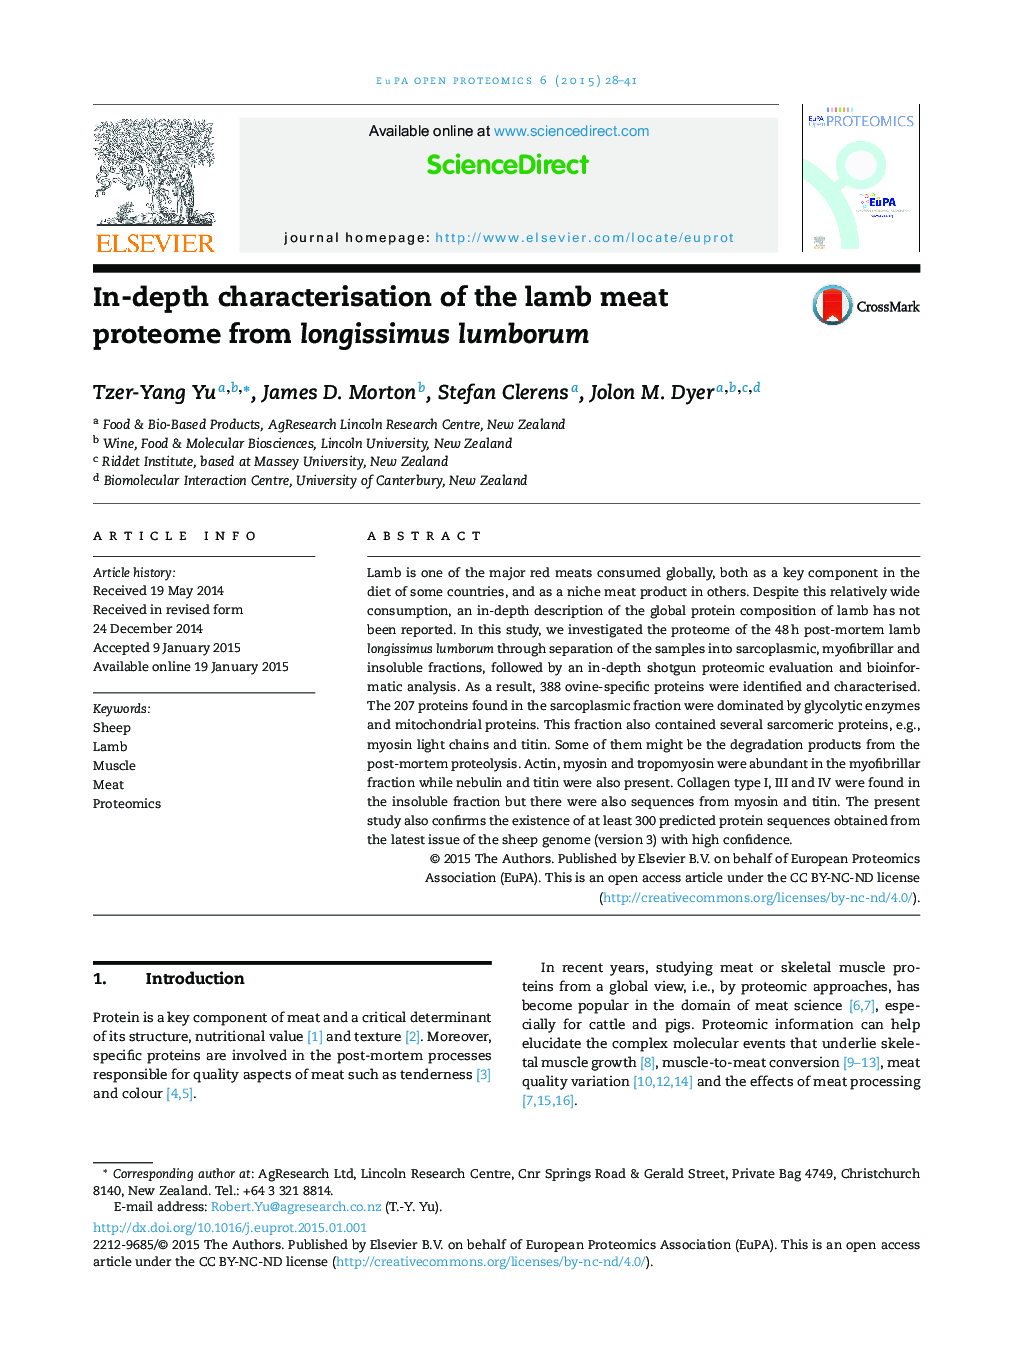 In-depth characterisation of the lamb meat proteome from longissimus lumborum 